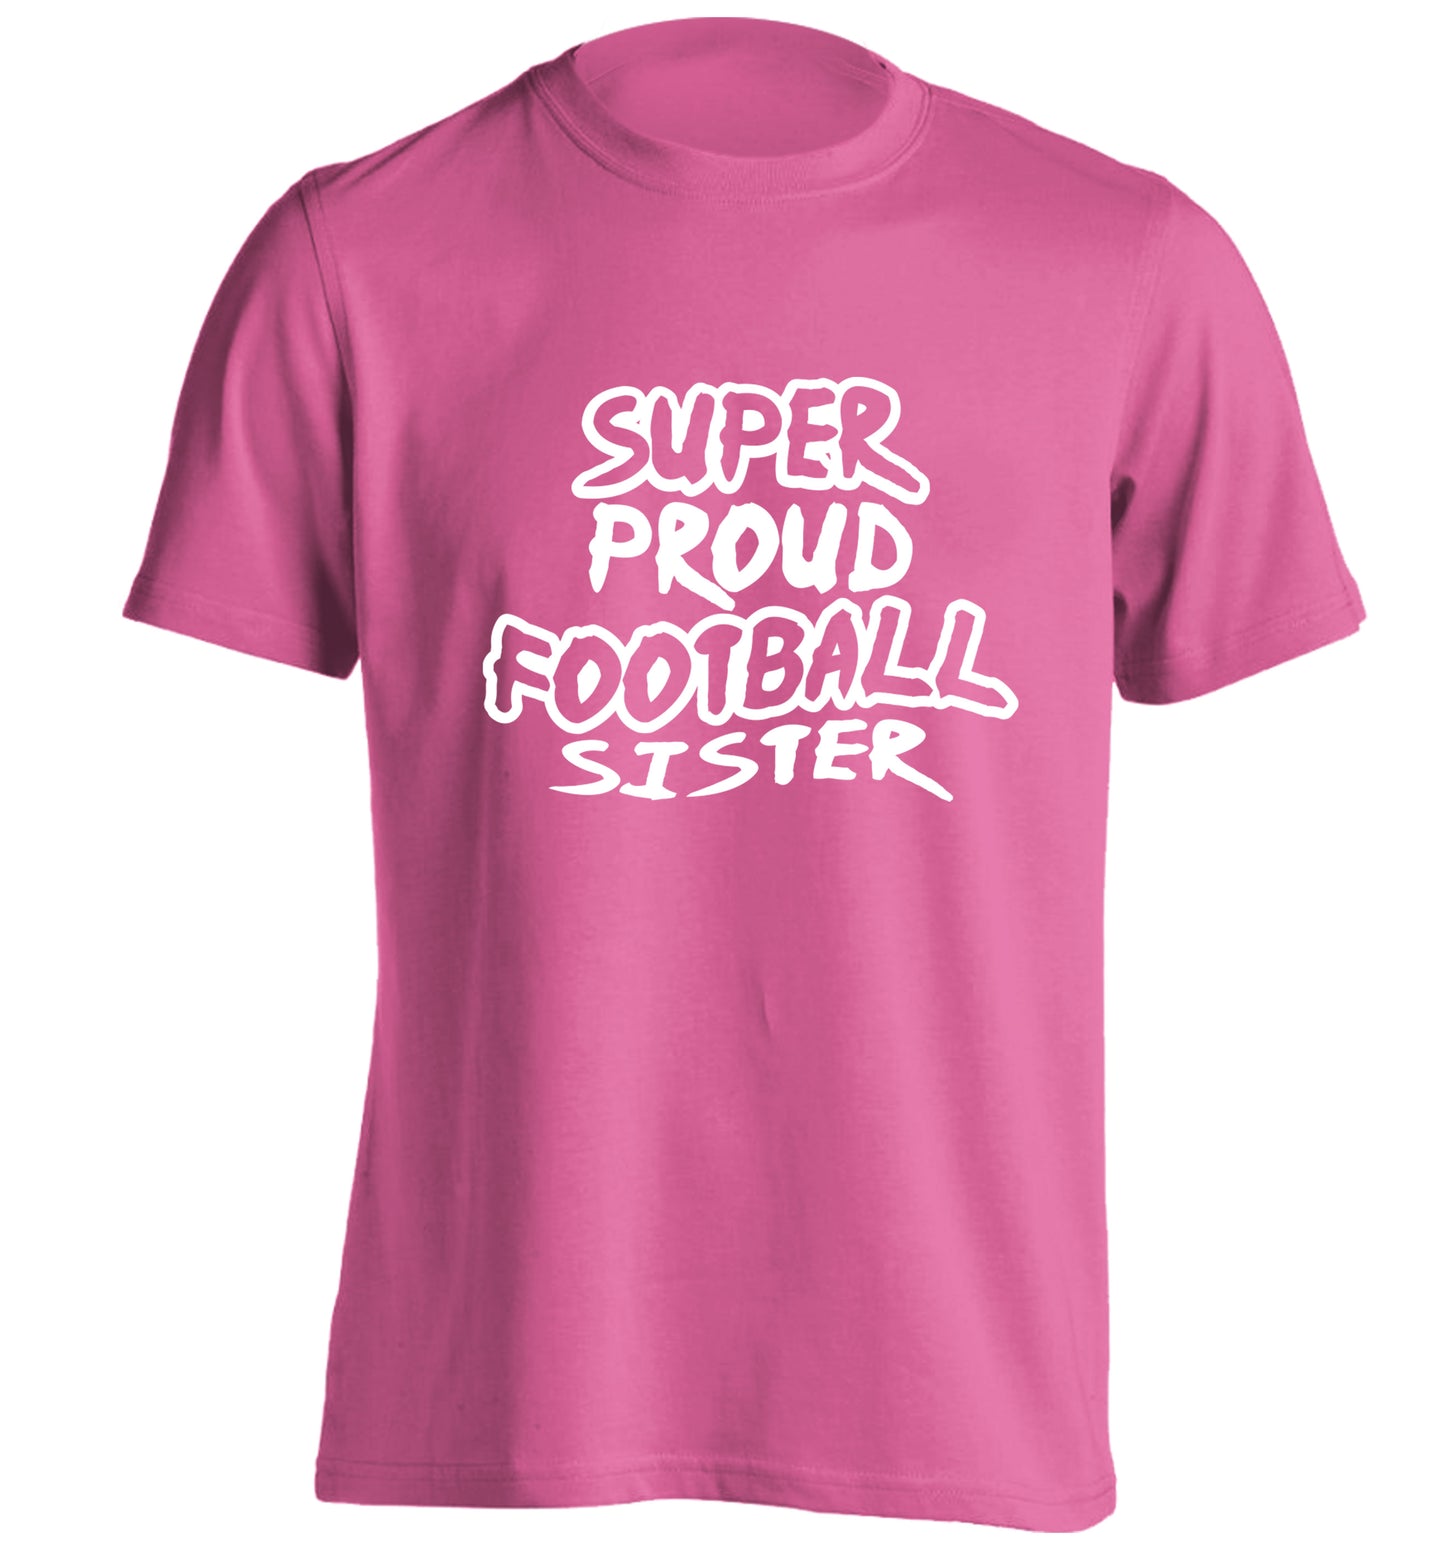 Super proud football sister adults unisexpink Tshirt 2XL